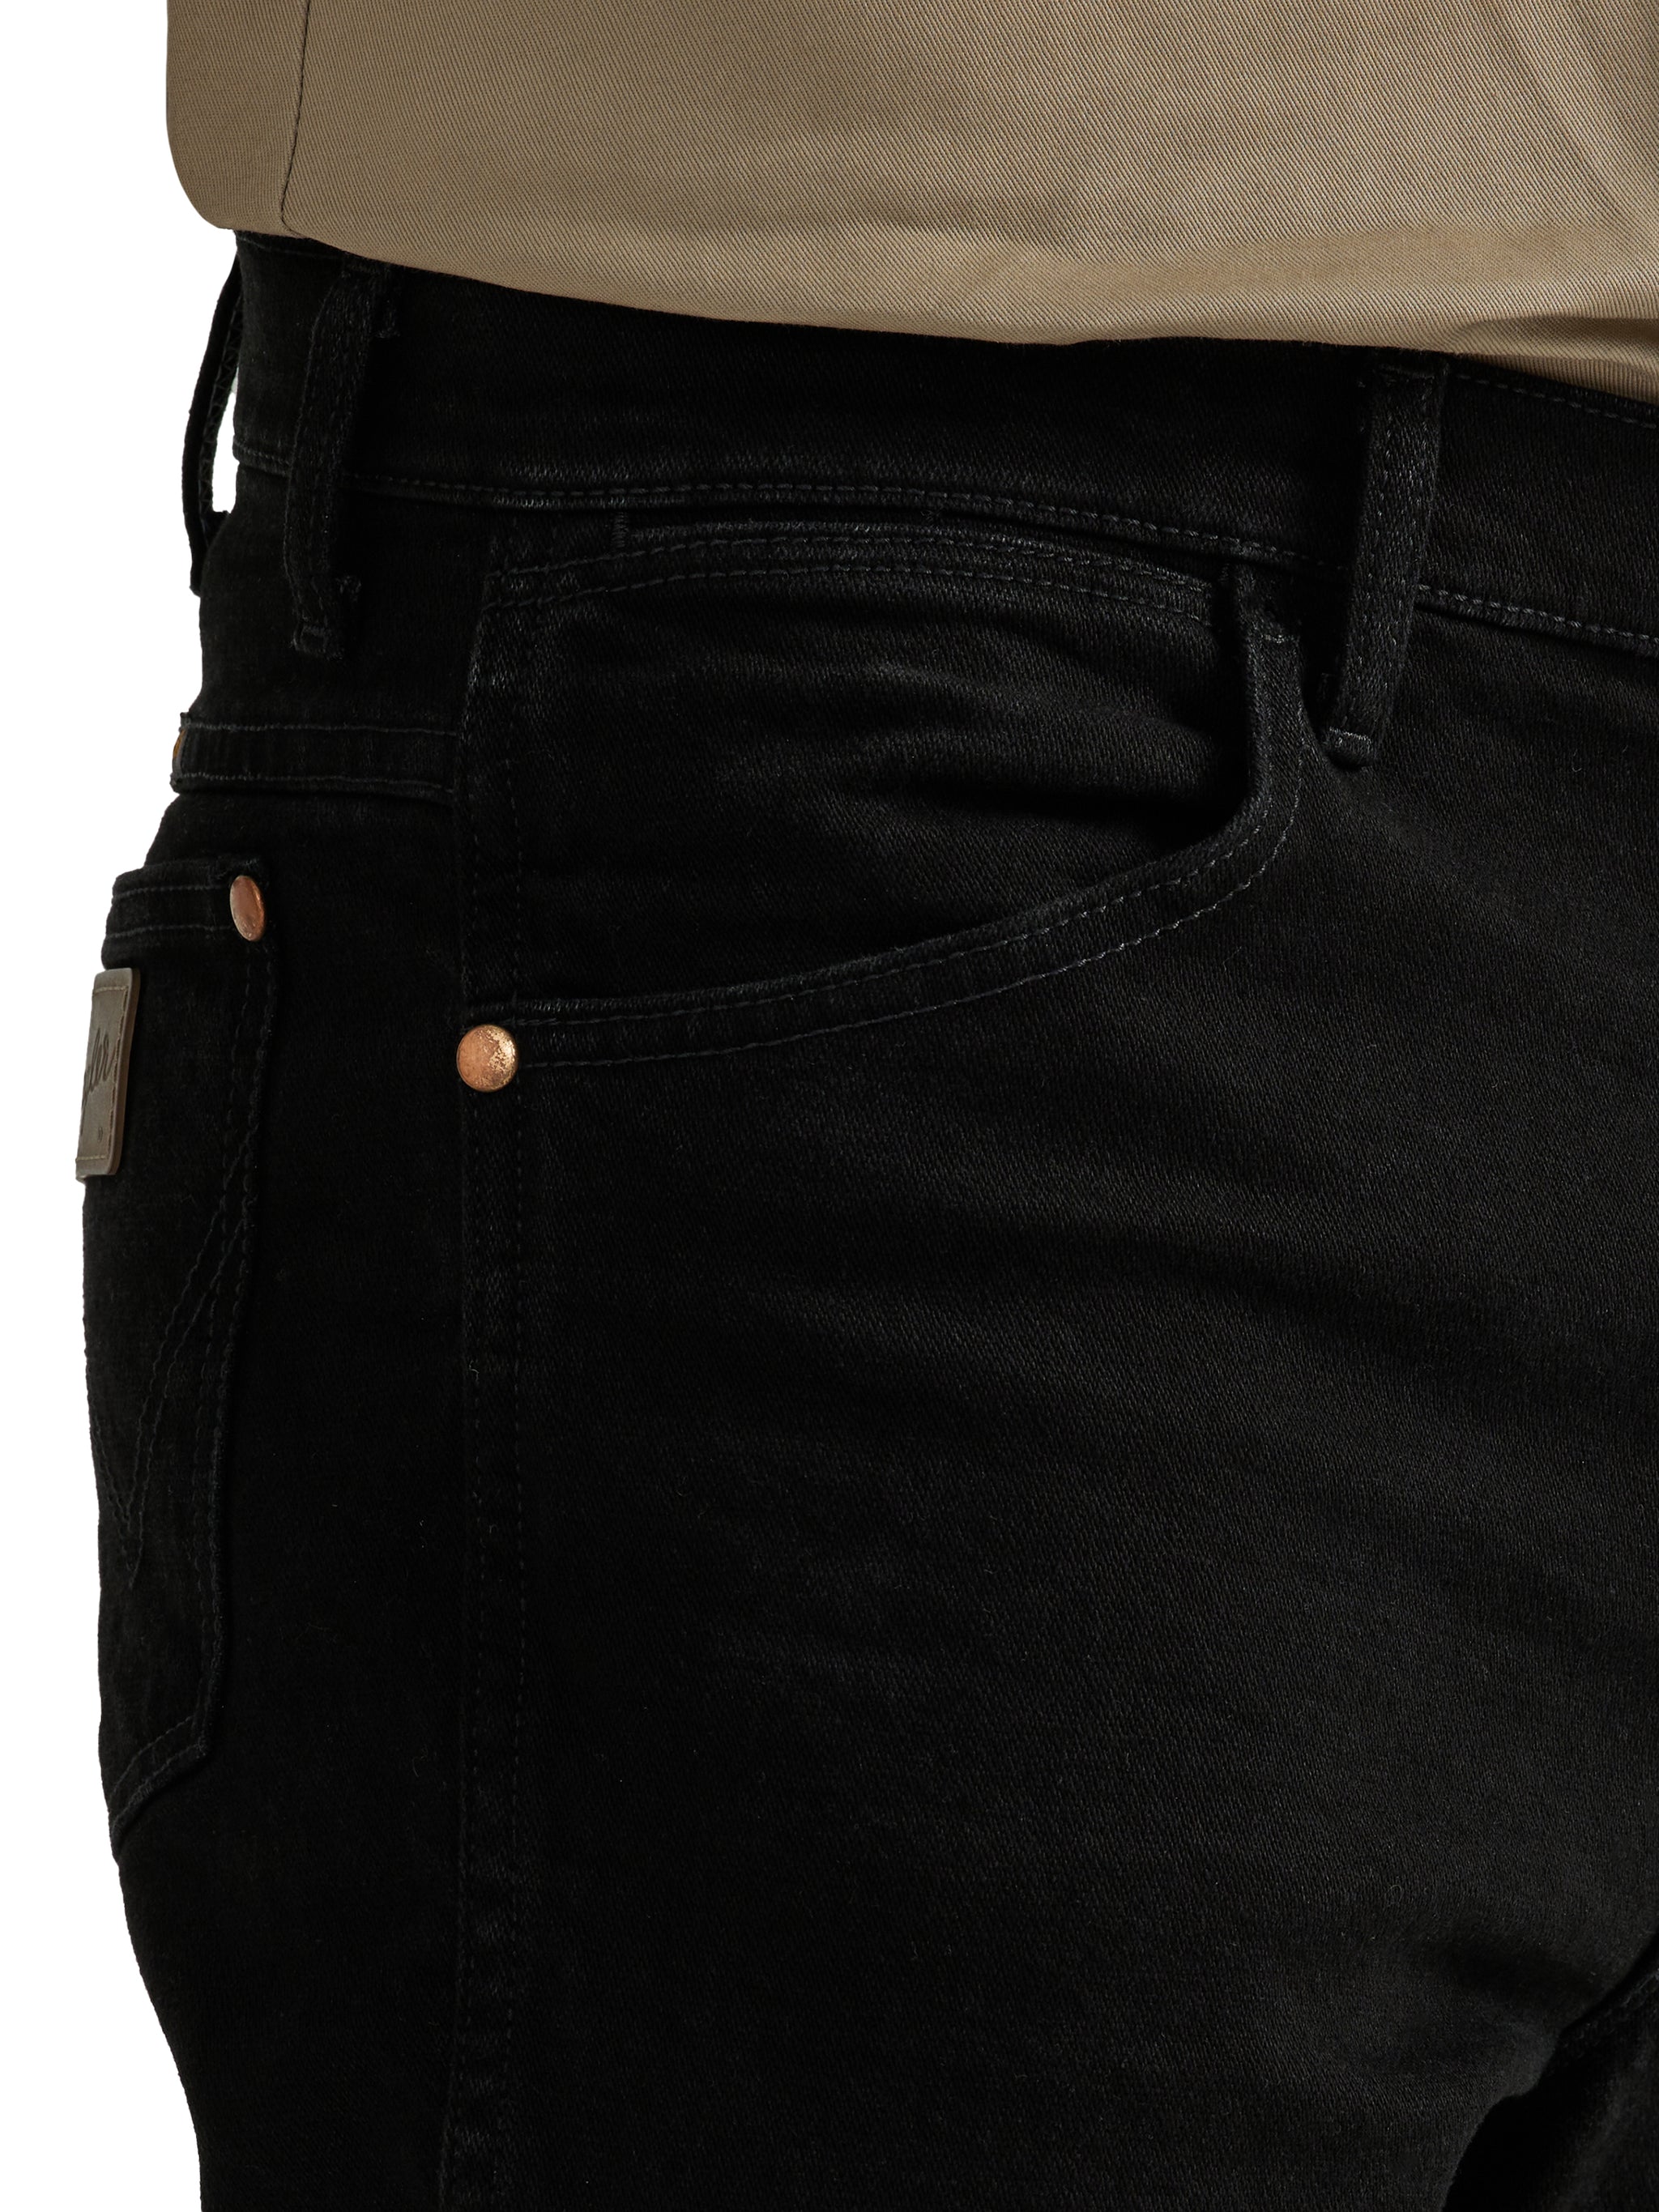 Wrangler Men's Cowboy Cut Slim Fit Active Flex Jeans - Gavel